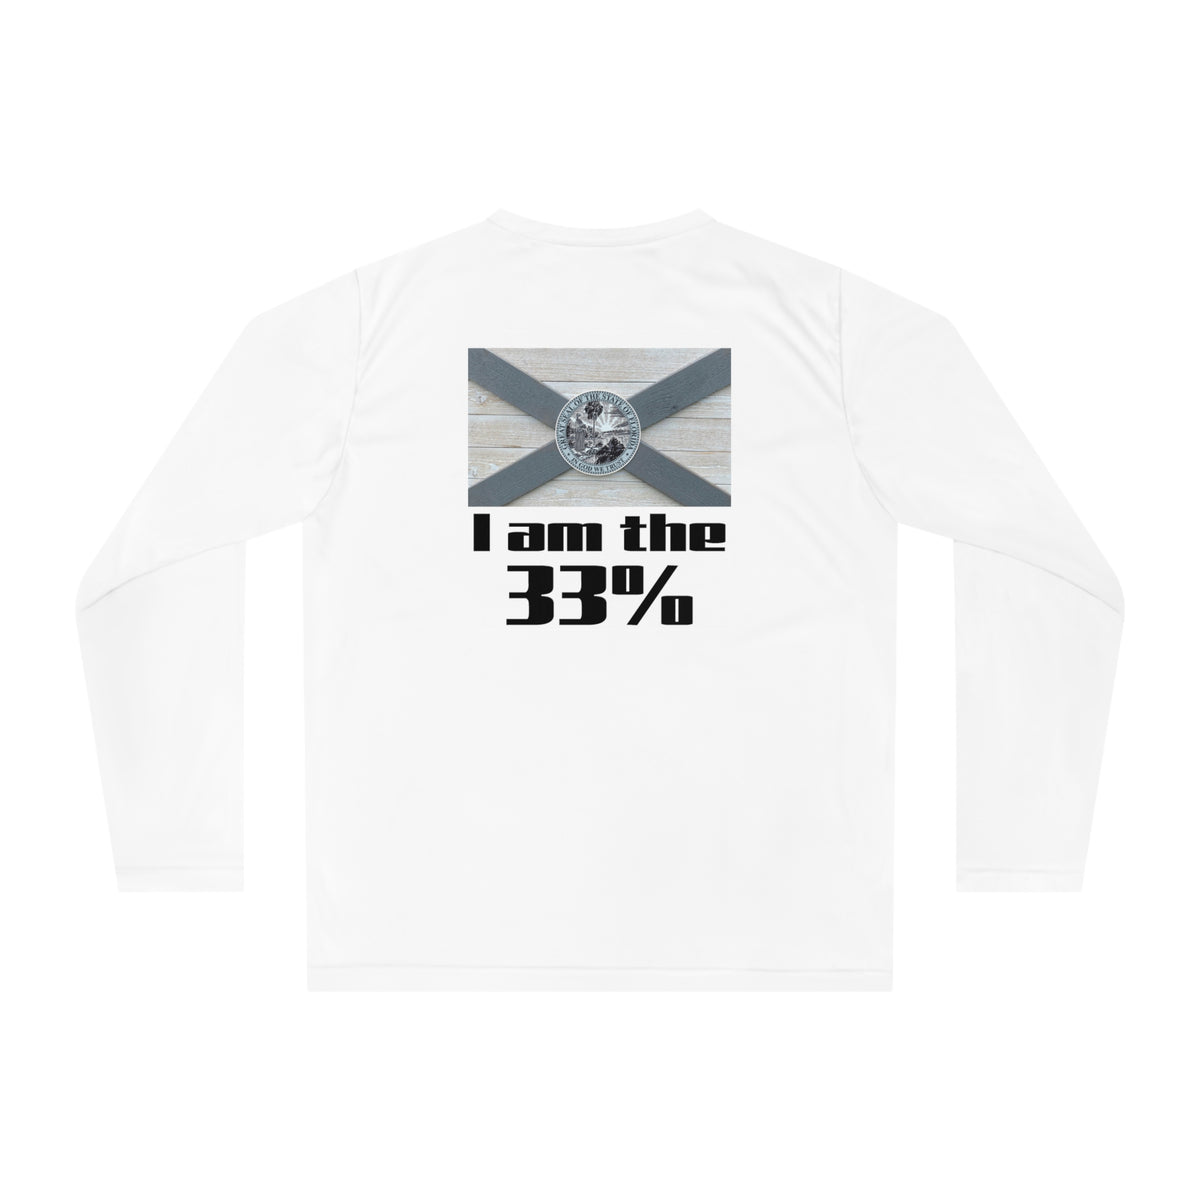 I Am the 33% Men's UPF 40+ Long Sleeve Shirt